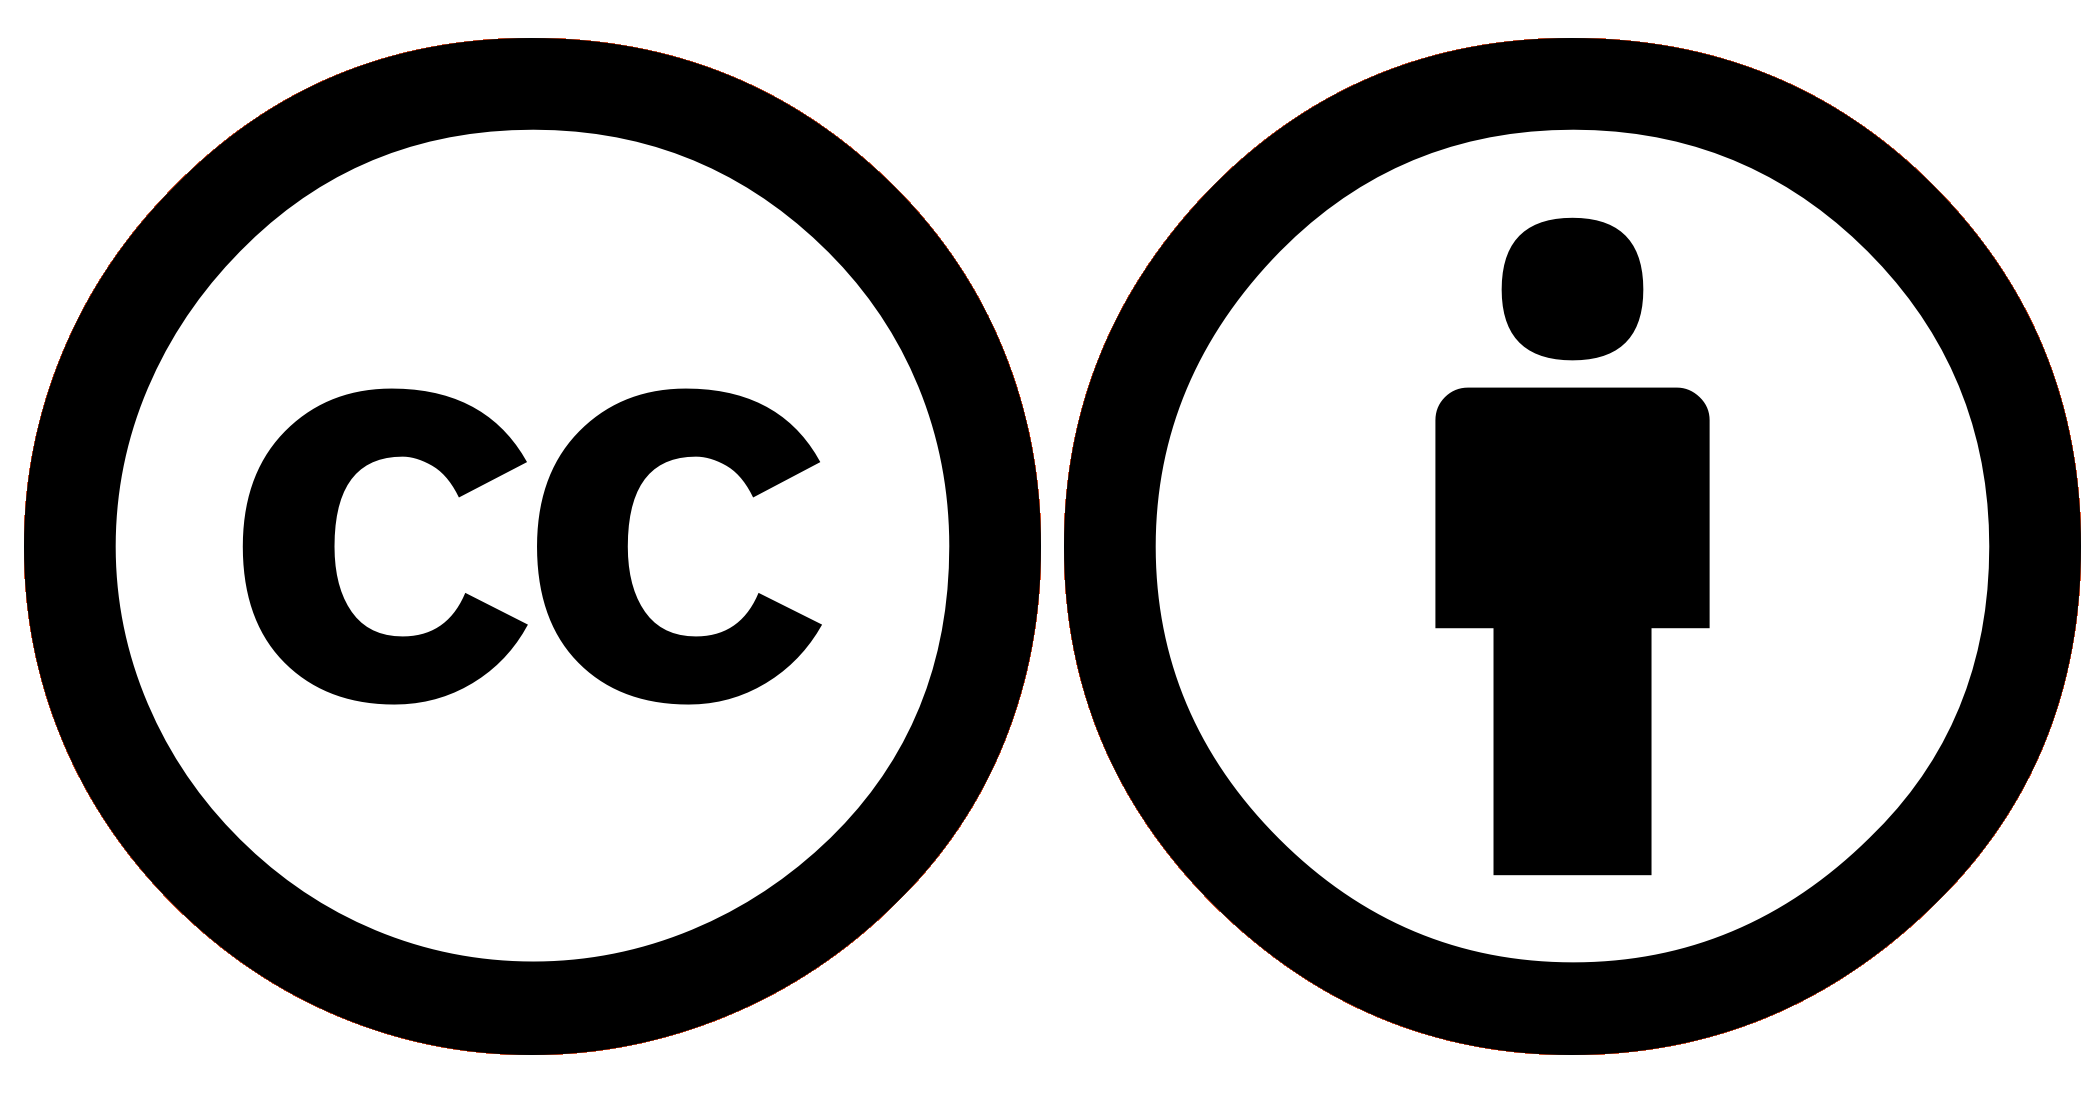 Creative commons 4.0. Creative Commons значки. Creative Commons Attribution 4.0. (Cc by 4.0). Creative Commons Attribution.